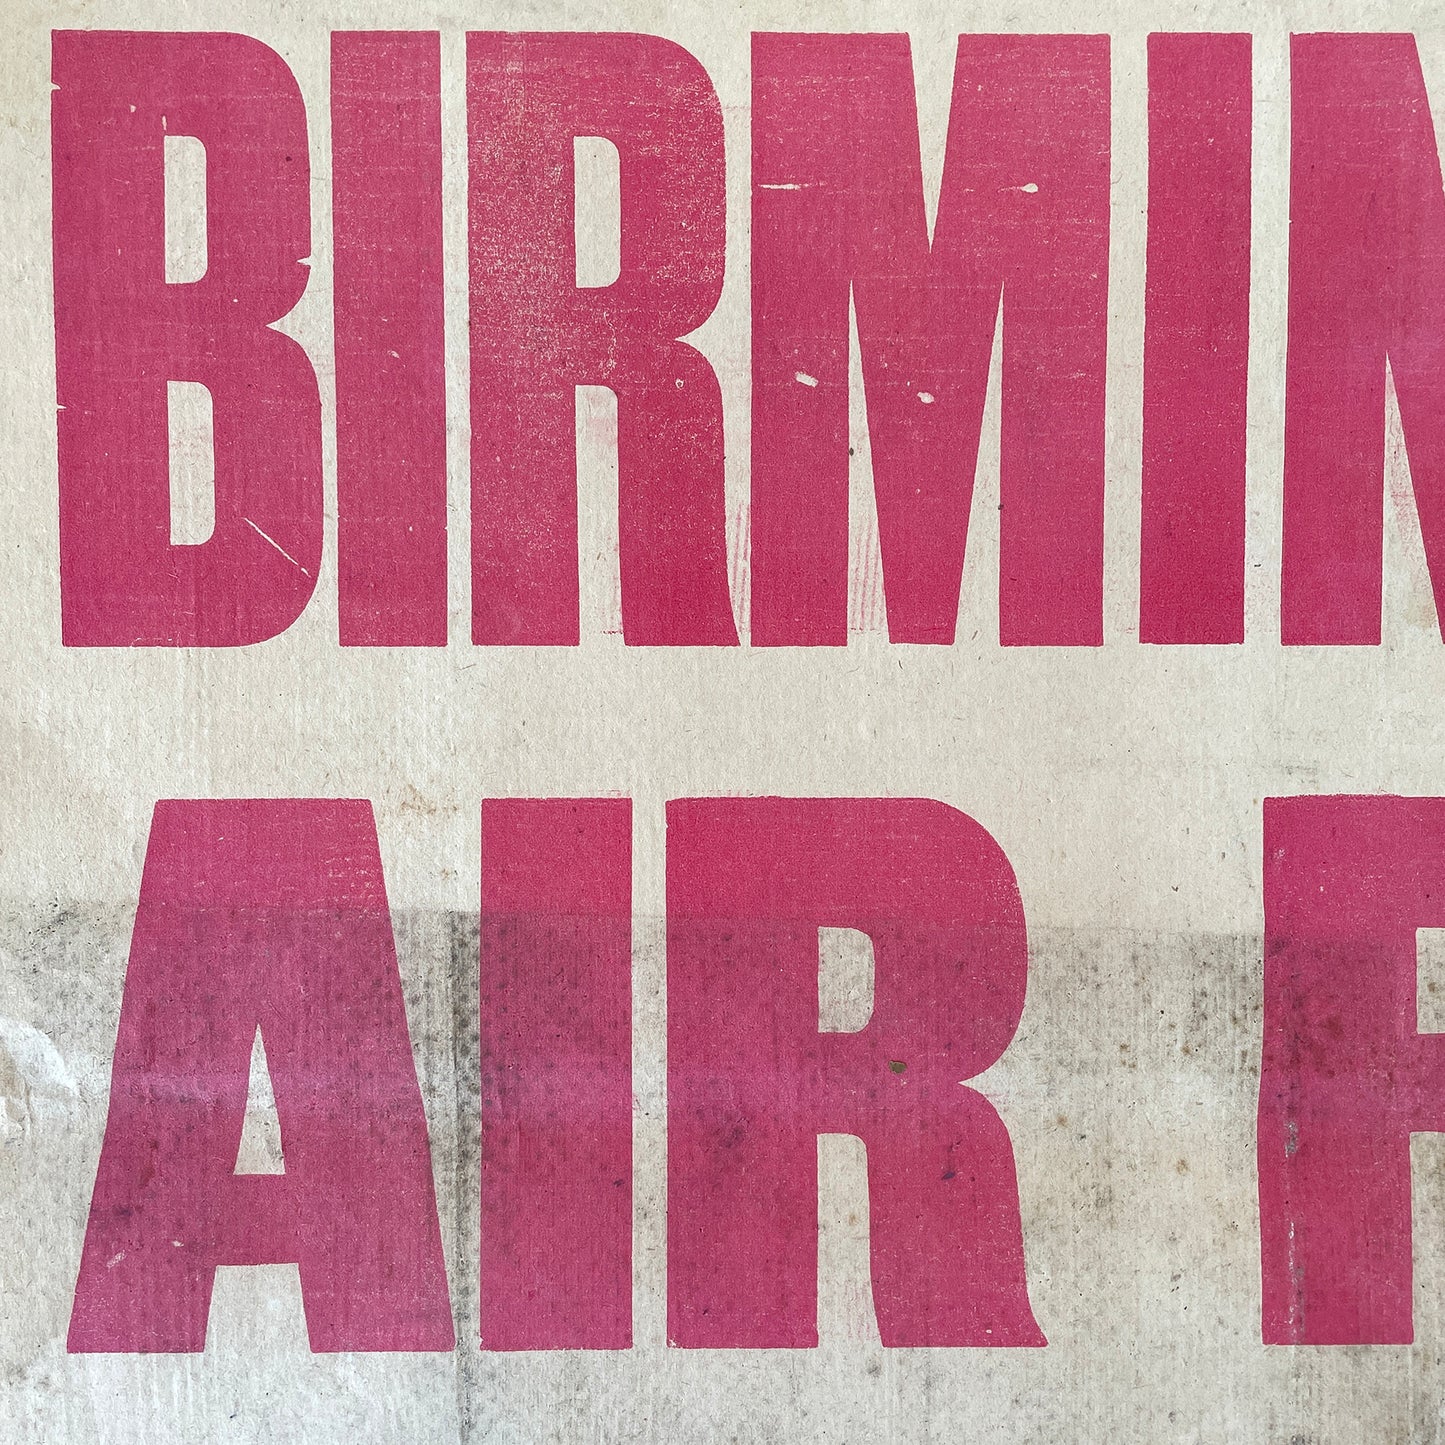 1913 Newspaper Headline Poster – ‘Birmingham Air Race Rivals’ - Sukie